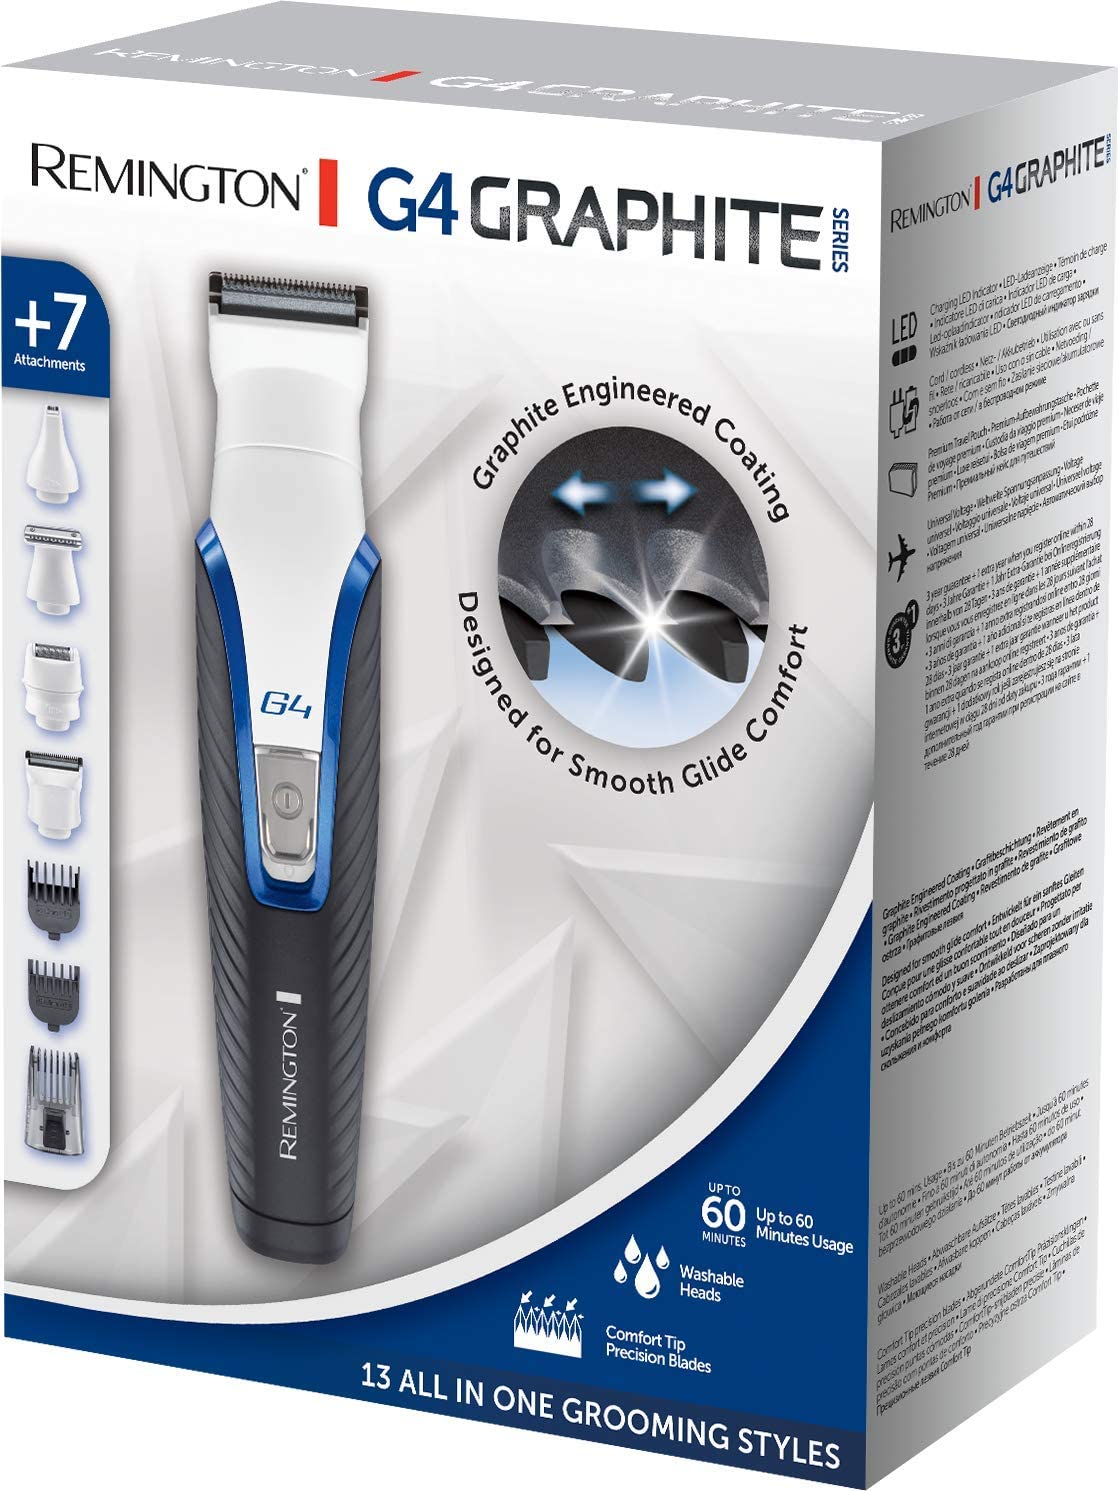 REMINGTON PG 4000 G4 Graphite Series Multi Grooming Kit